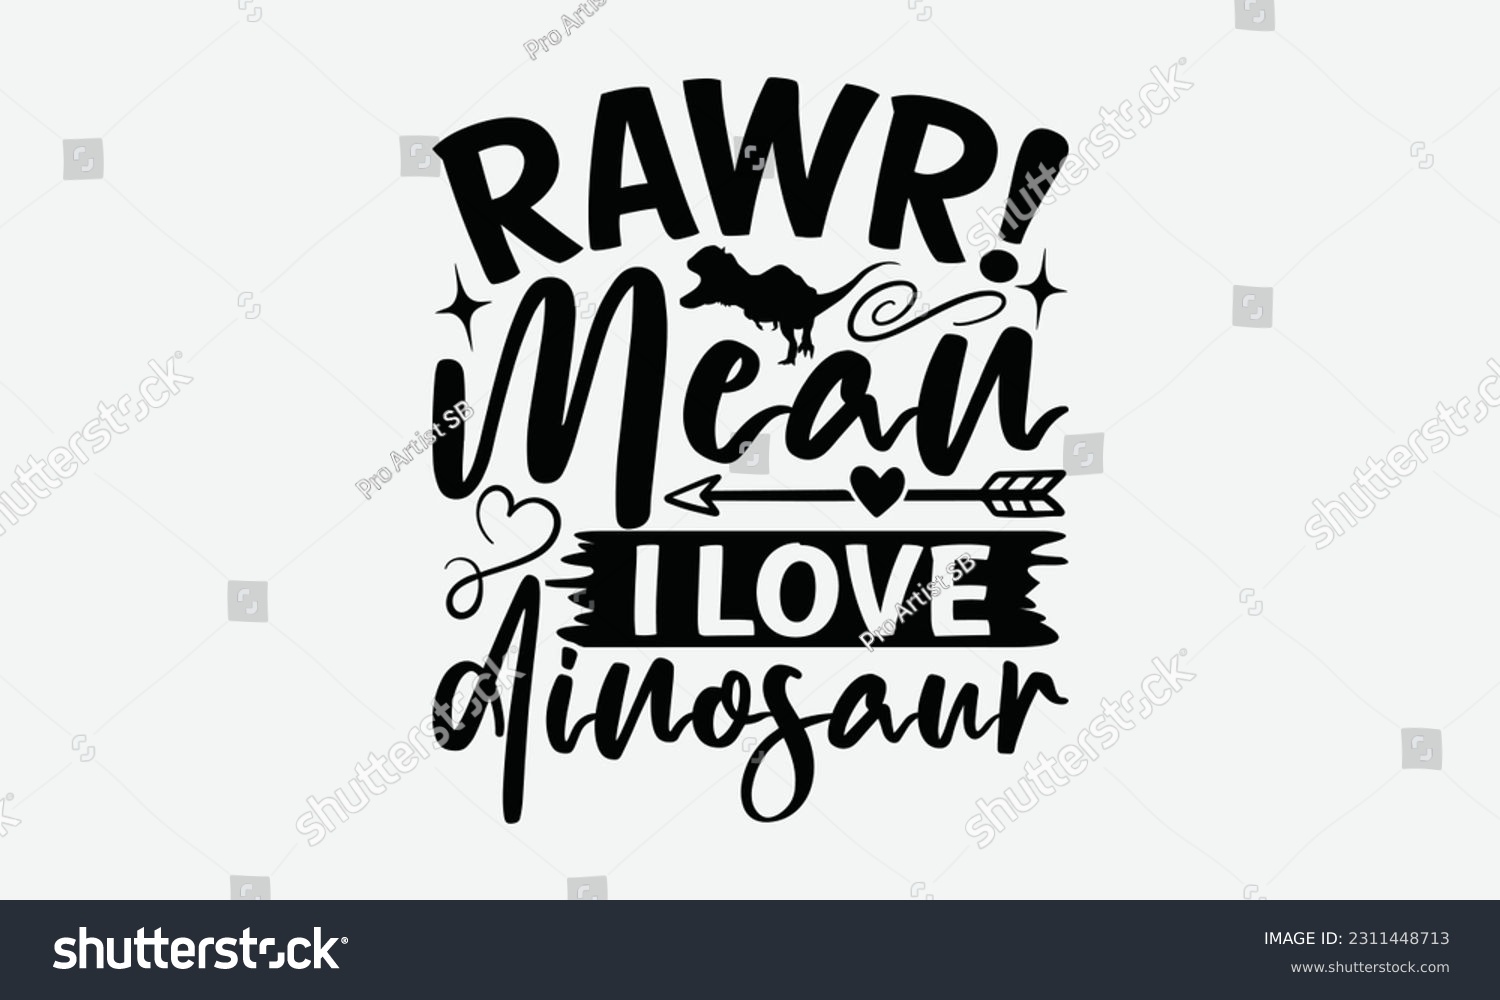 SVG of Rawr! Mean I Love Dinosaur - Dinosaur SVG Design, Motivational Inspirational T-shirt Quotes, Hand Drawn Vintage Illustration With Hand-Lettering And Decoration Elements. svg